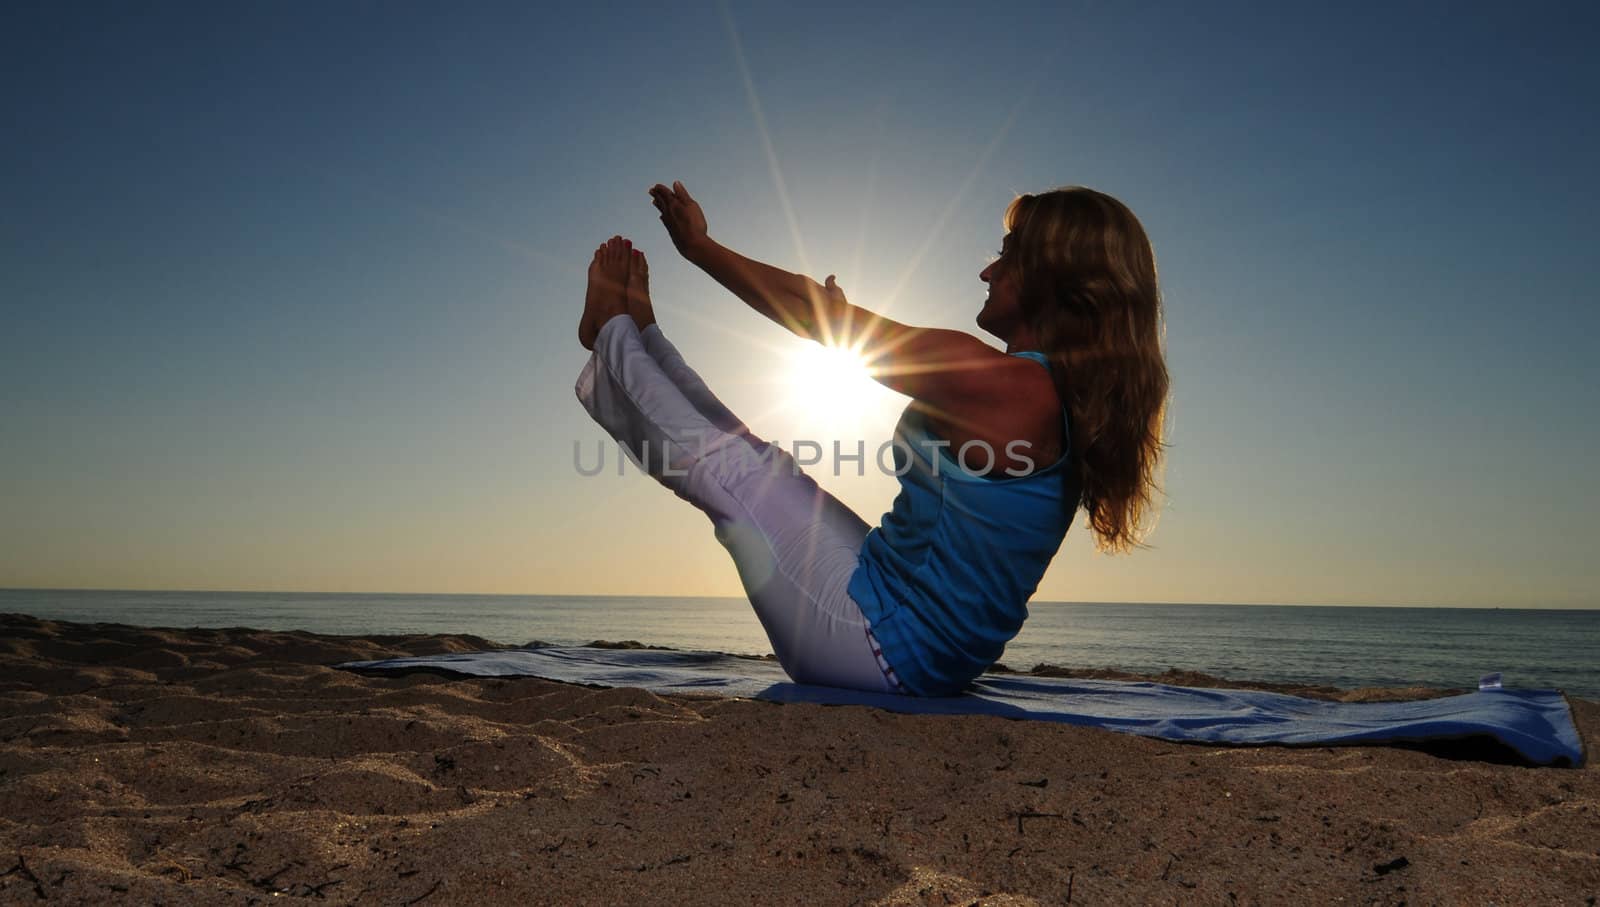 full boat yoga pose on beach by ftlaudgirl